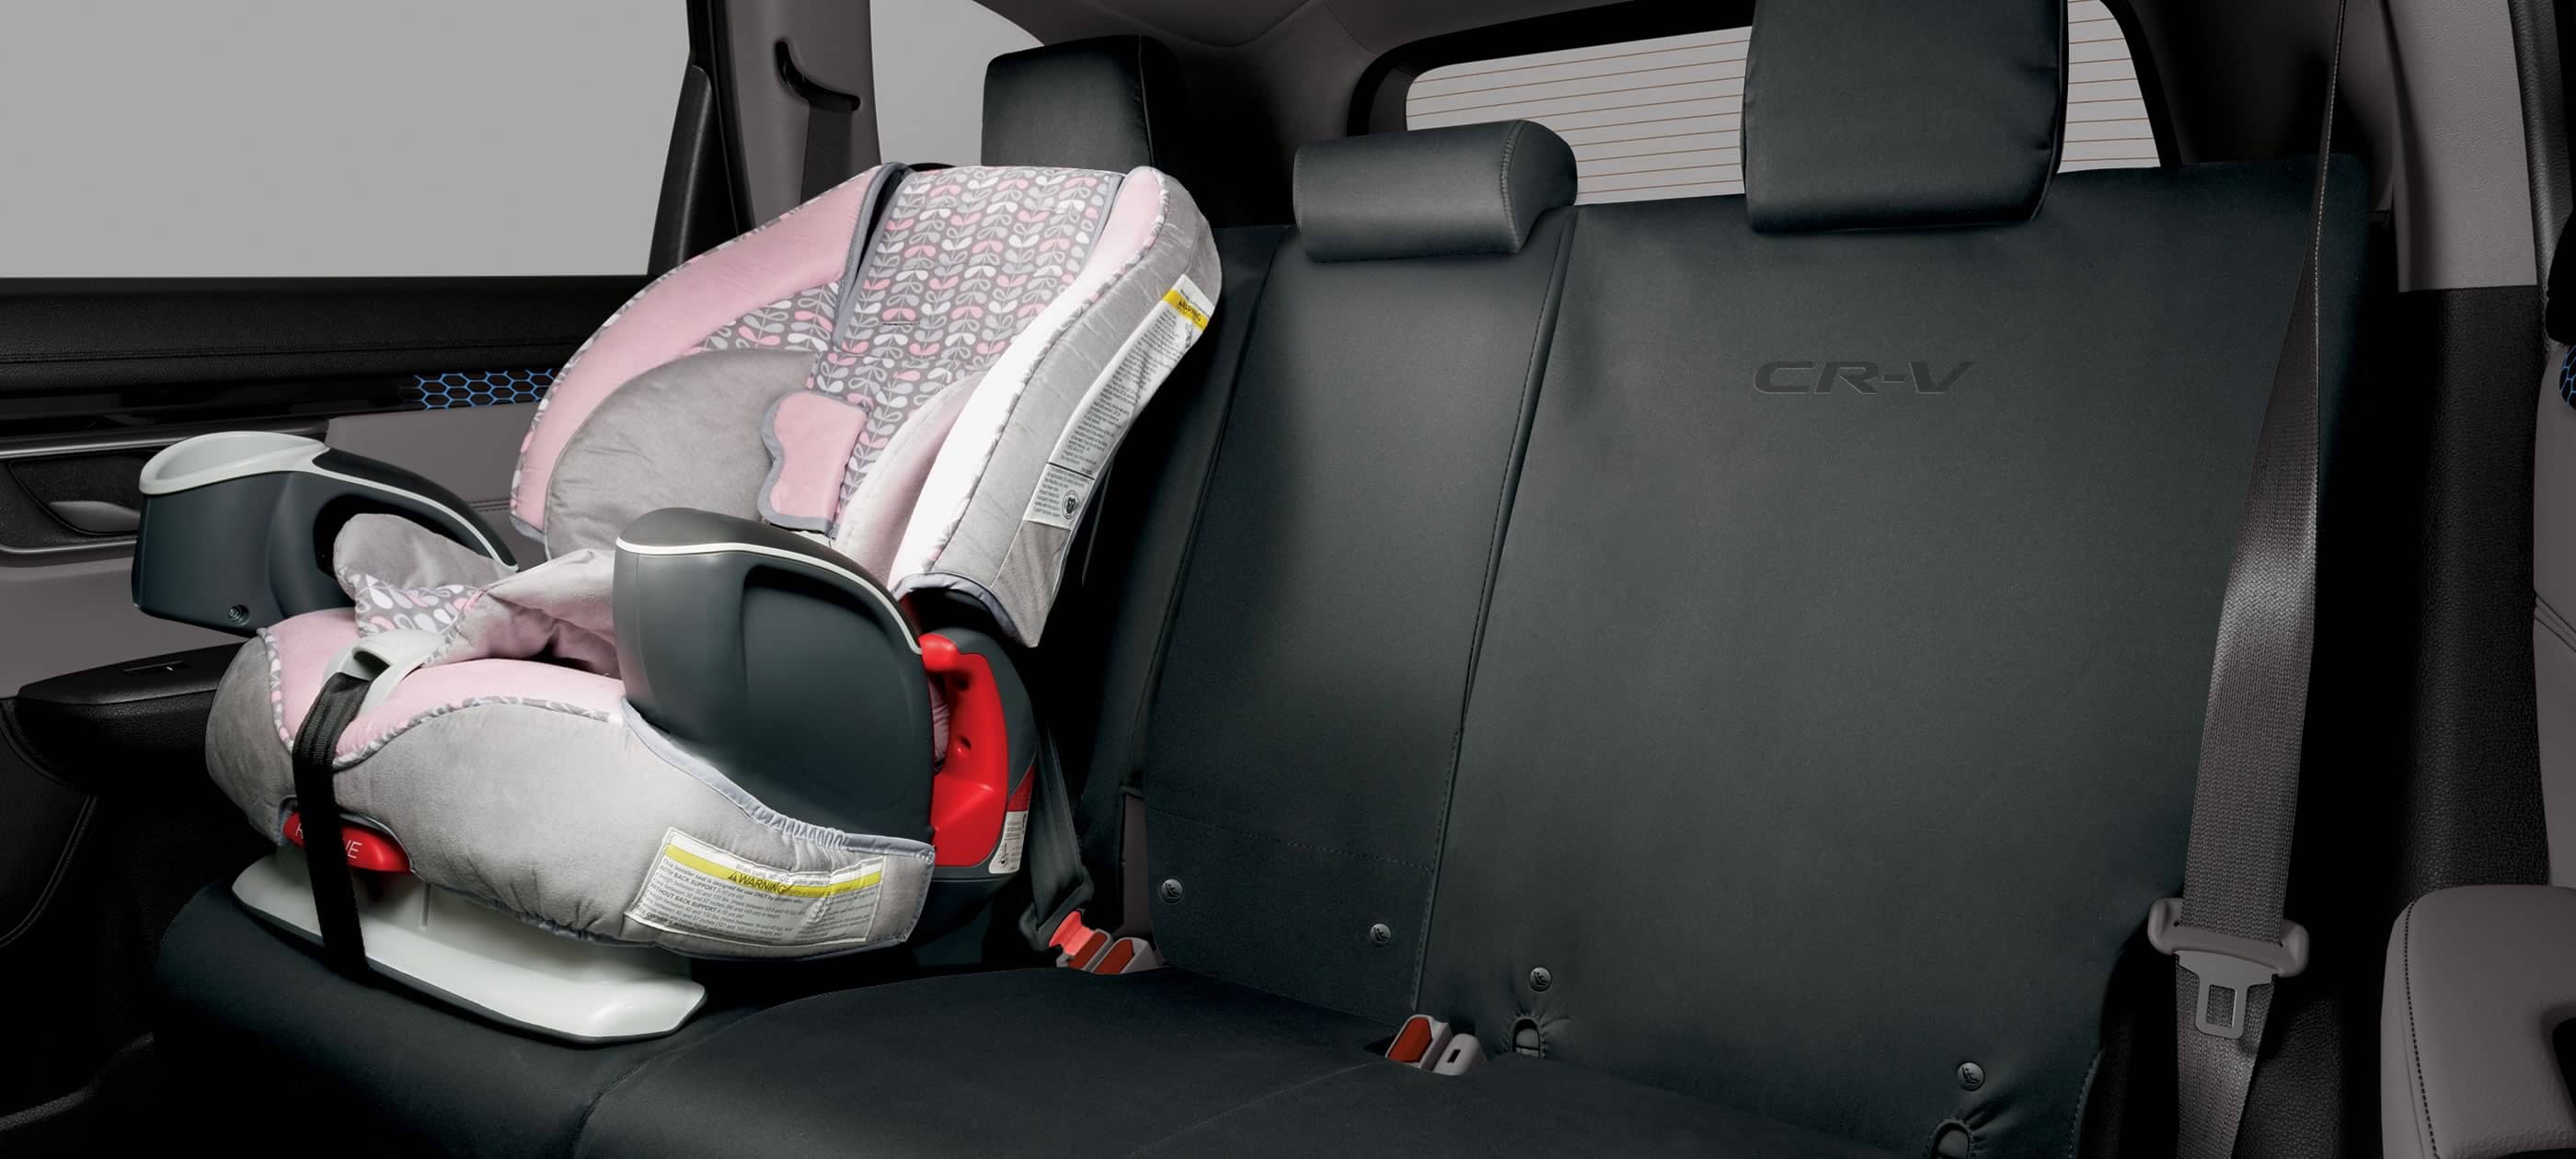 Honda CR-V Seat Covers Rear Denver